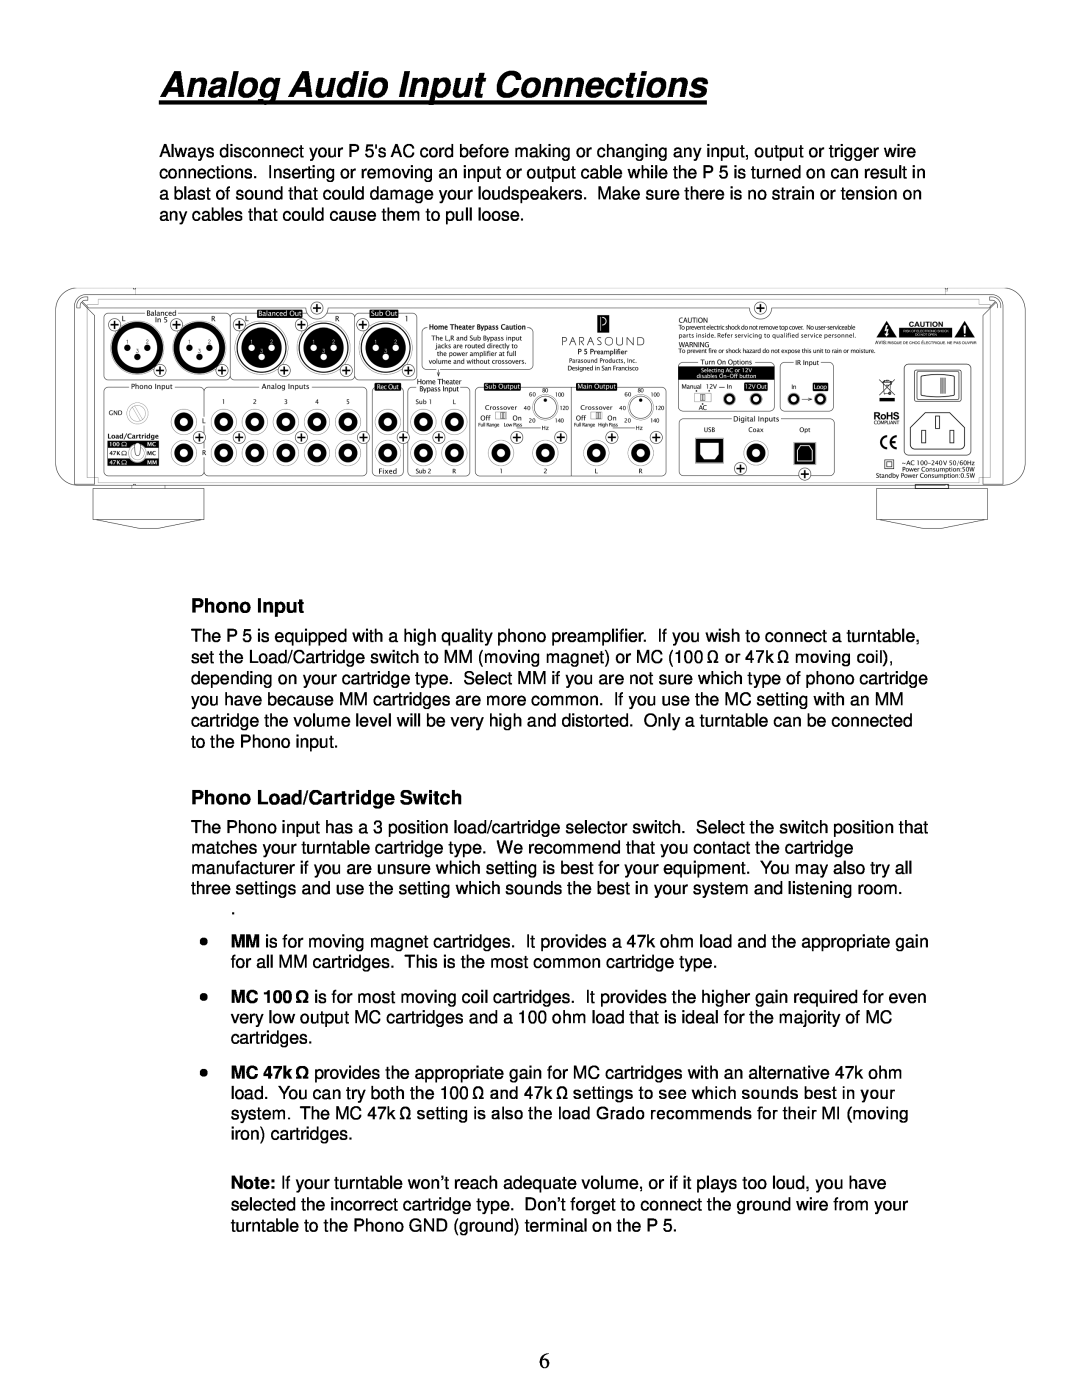 Parasound P 5 manual Analog Audio Input Connections, Phono Input, Phono Load/Cartridge Switch 